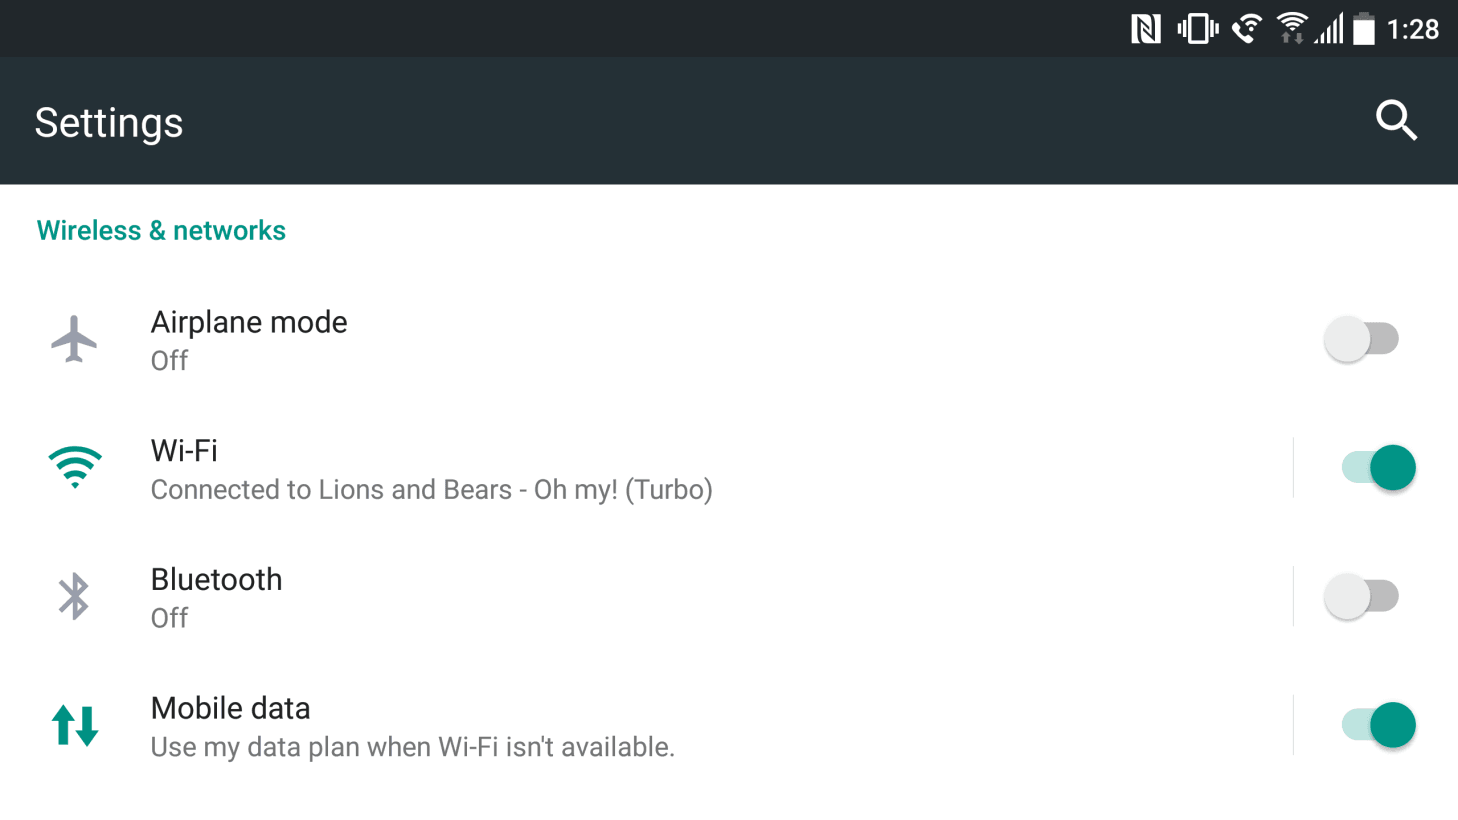 The settings menu looks like a Nexus.